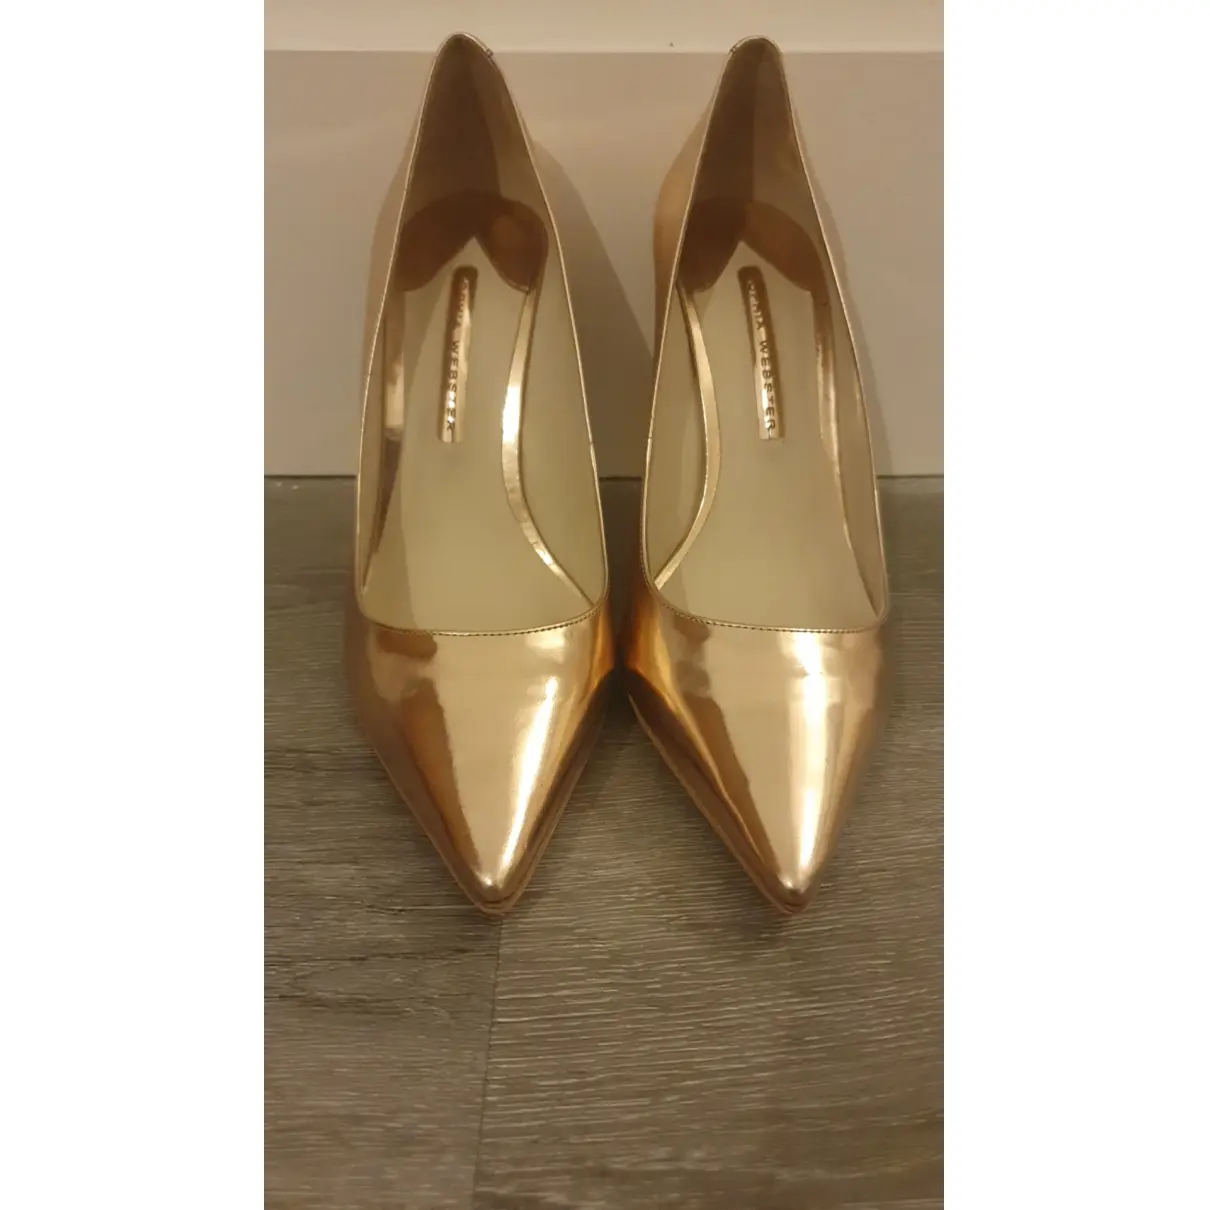 Buy Sophia Webster Patent leather heels online